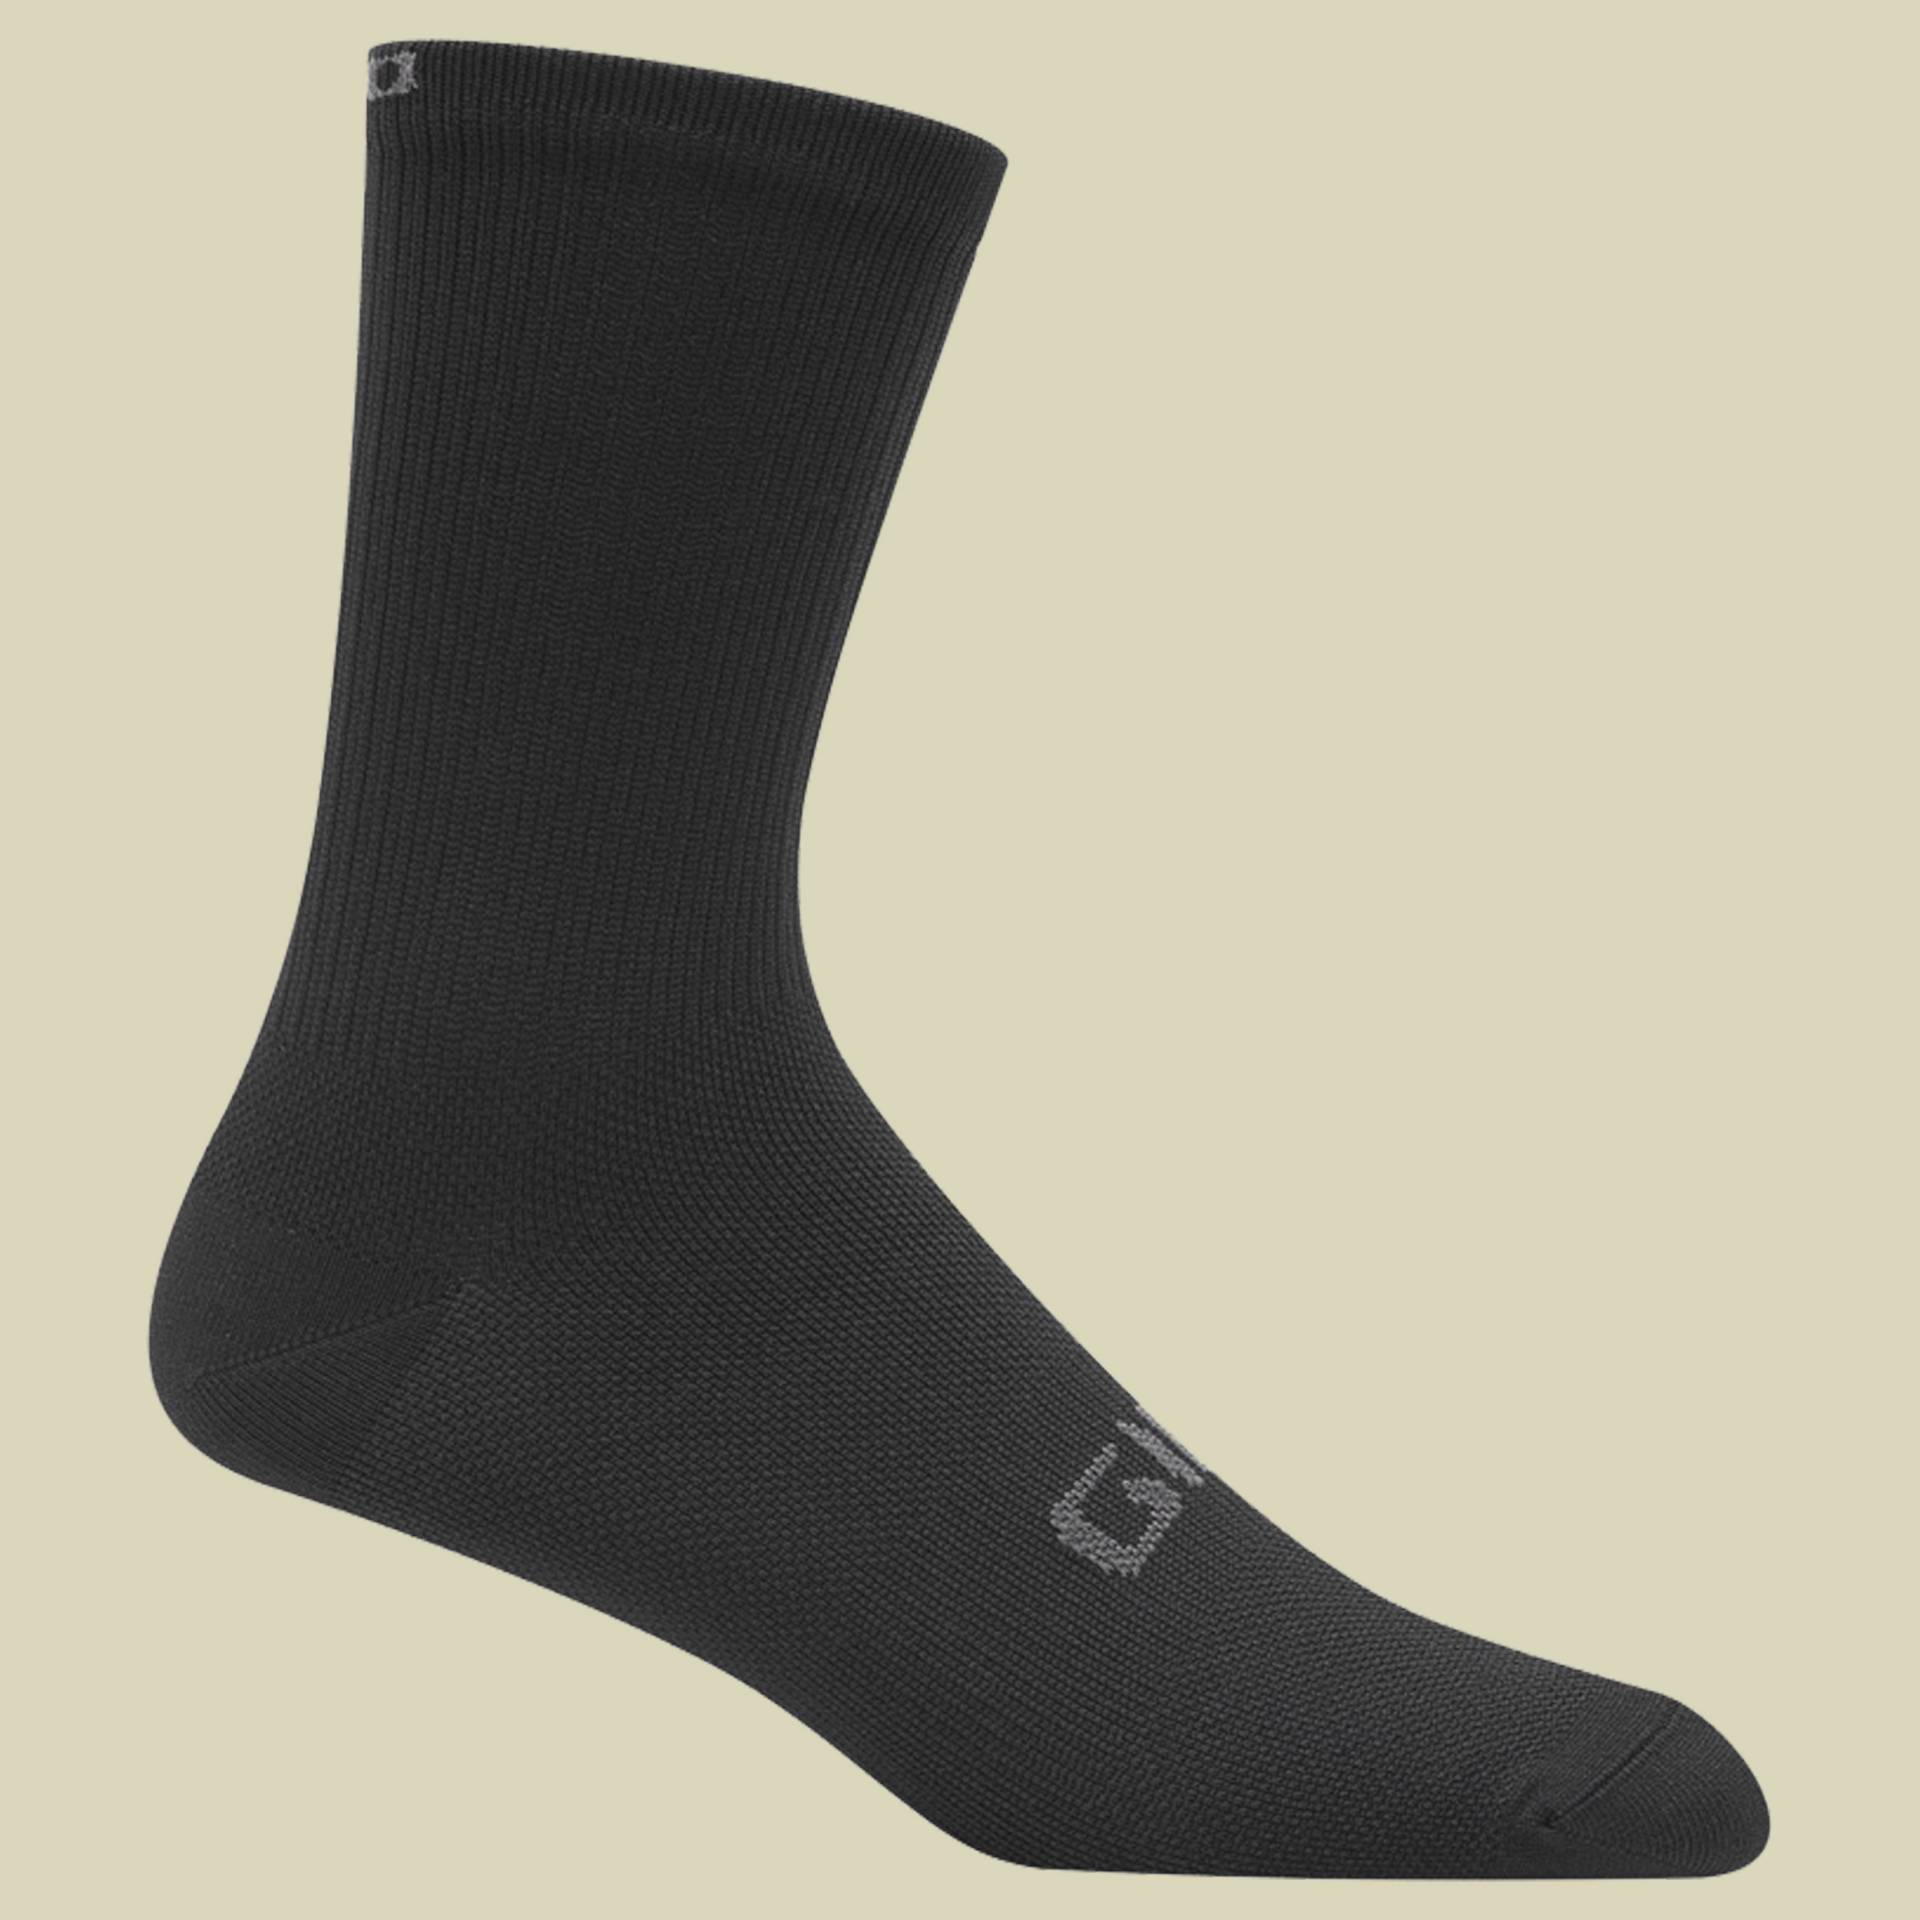 Xnetic H2O Sock Größe 36-39 Farbe black von Giro